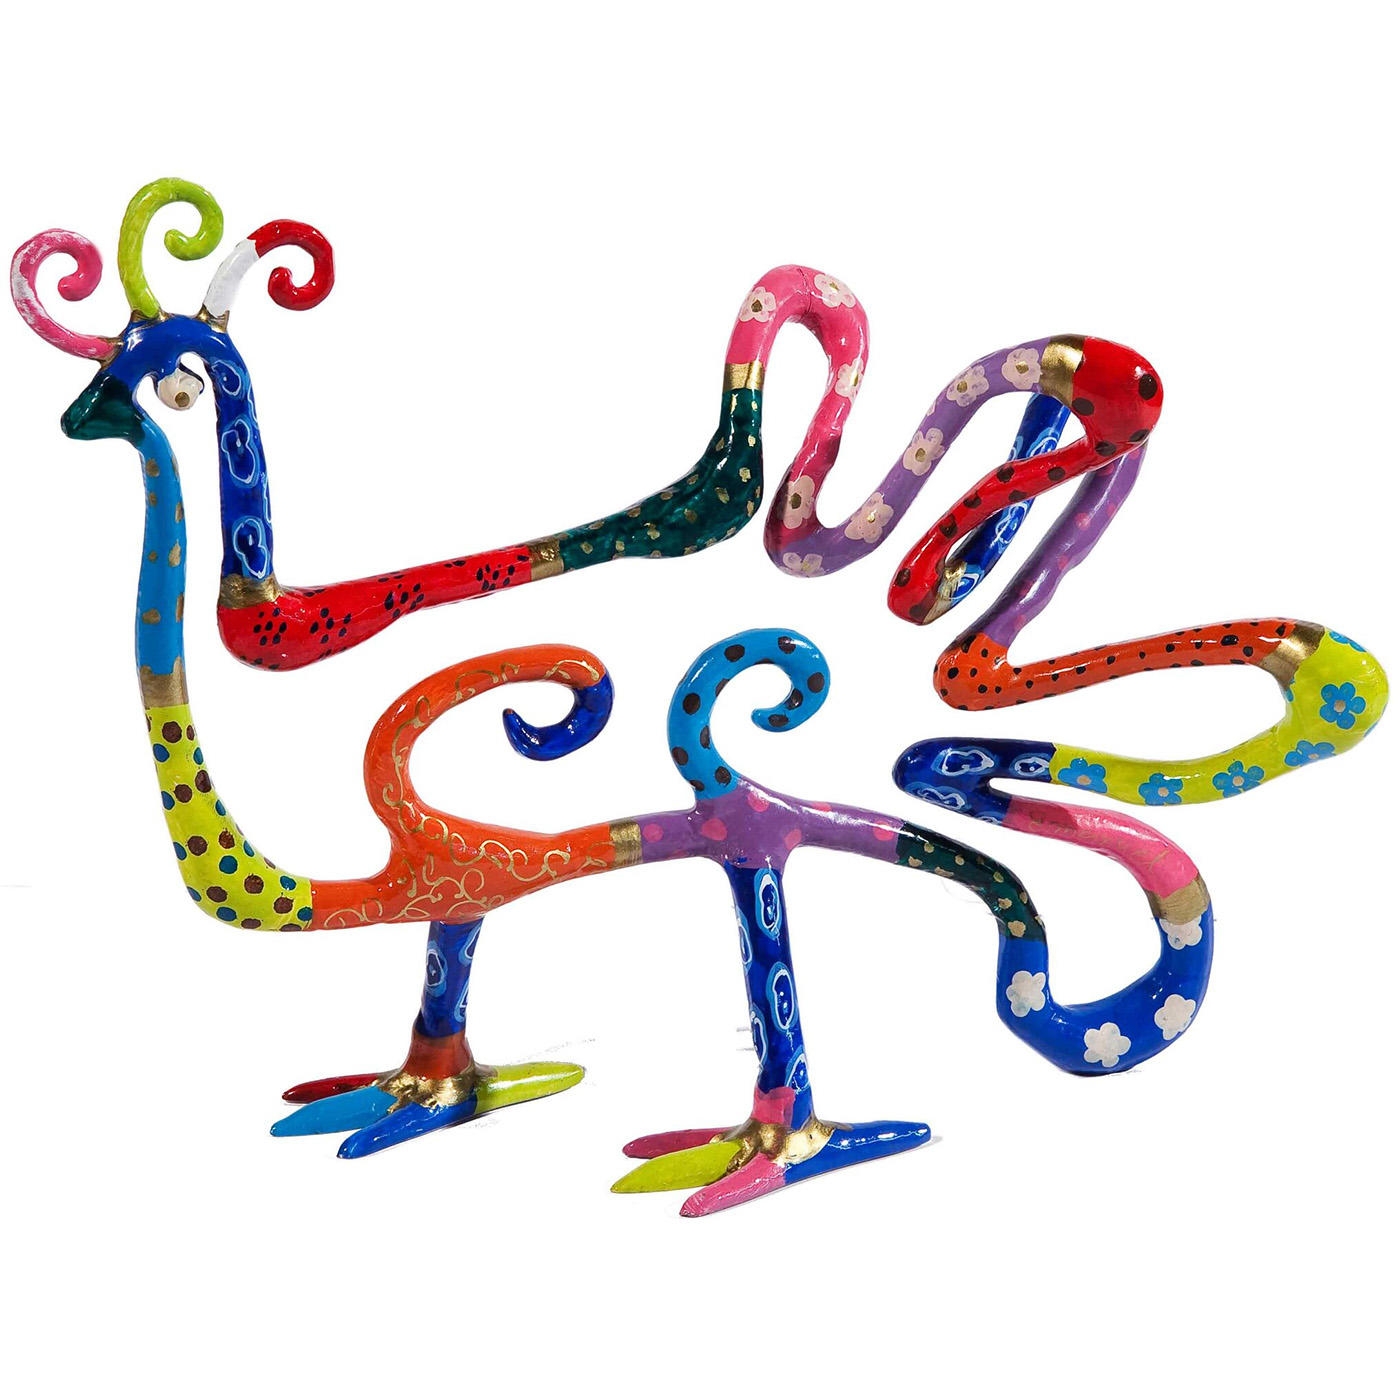 Yair Emanuel Hand Painted 3-Dimensional Peacock Sculpture - 1